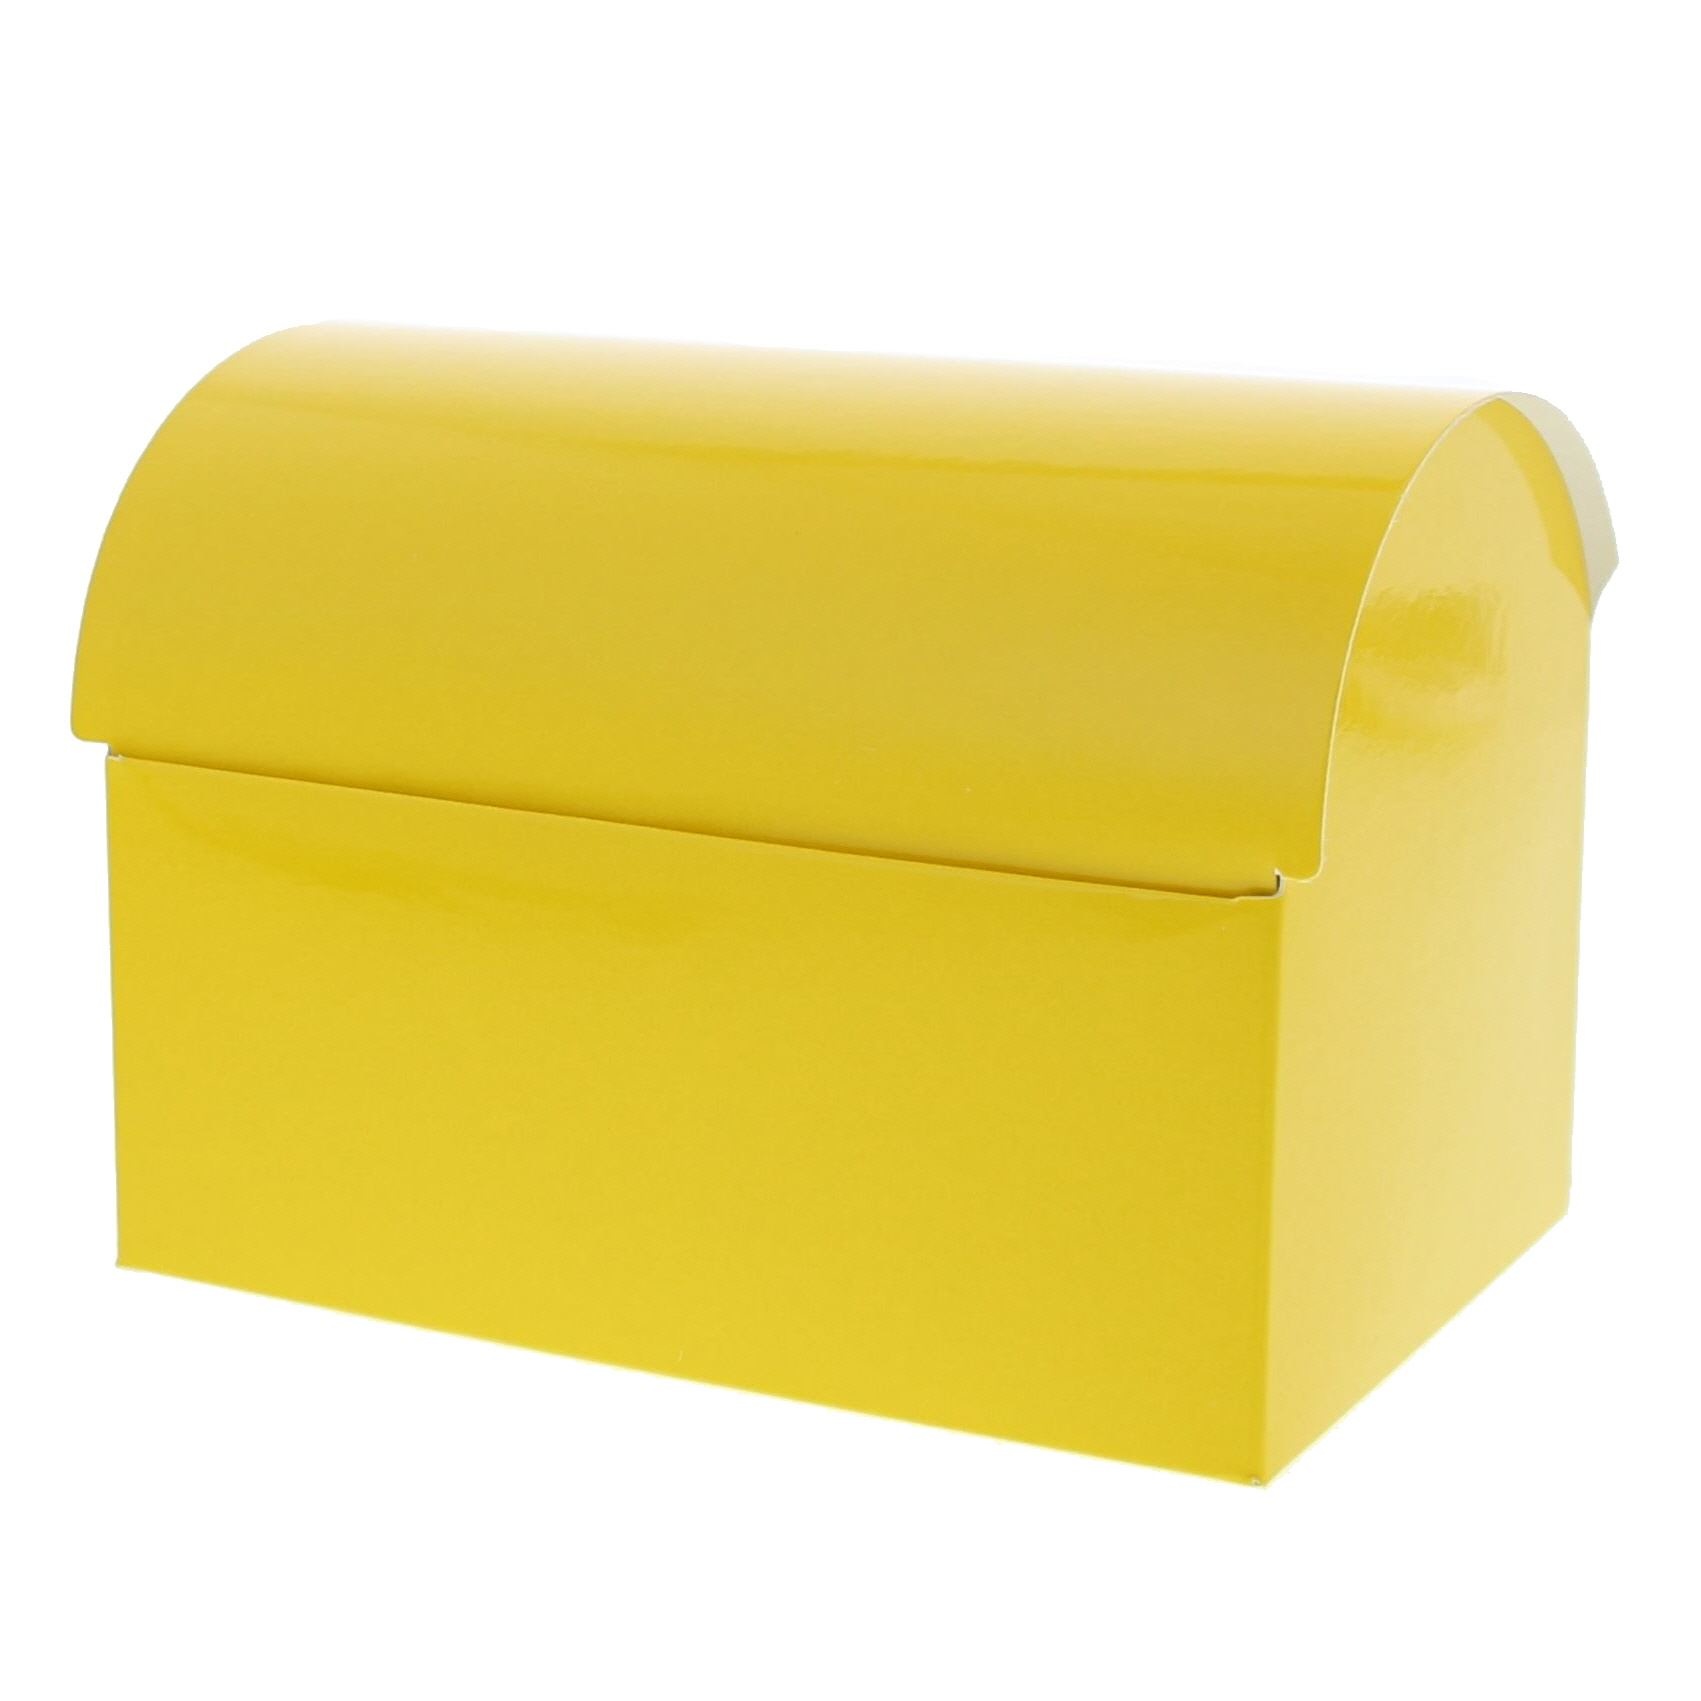 Treasure box - 500 gr. - 25 pieces - Yellow